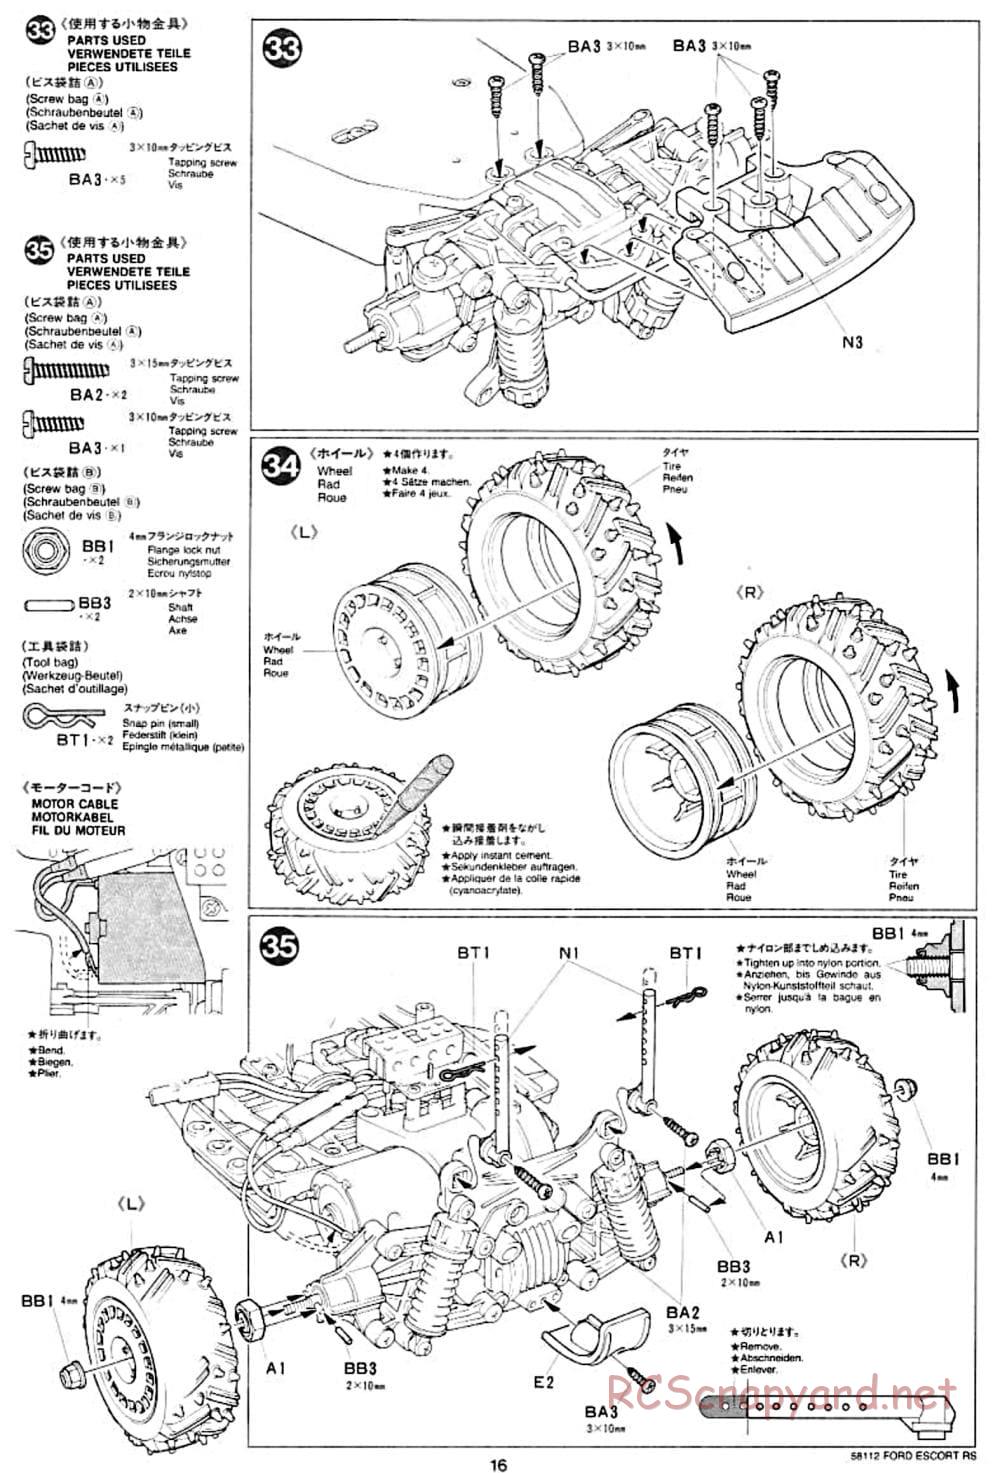 Tamiya - Ford Escort RS Cosworth - TA-01 Chassis - Manual - Page 16